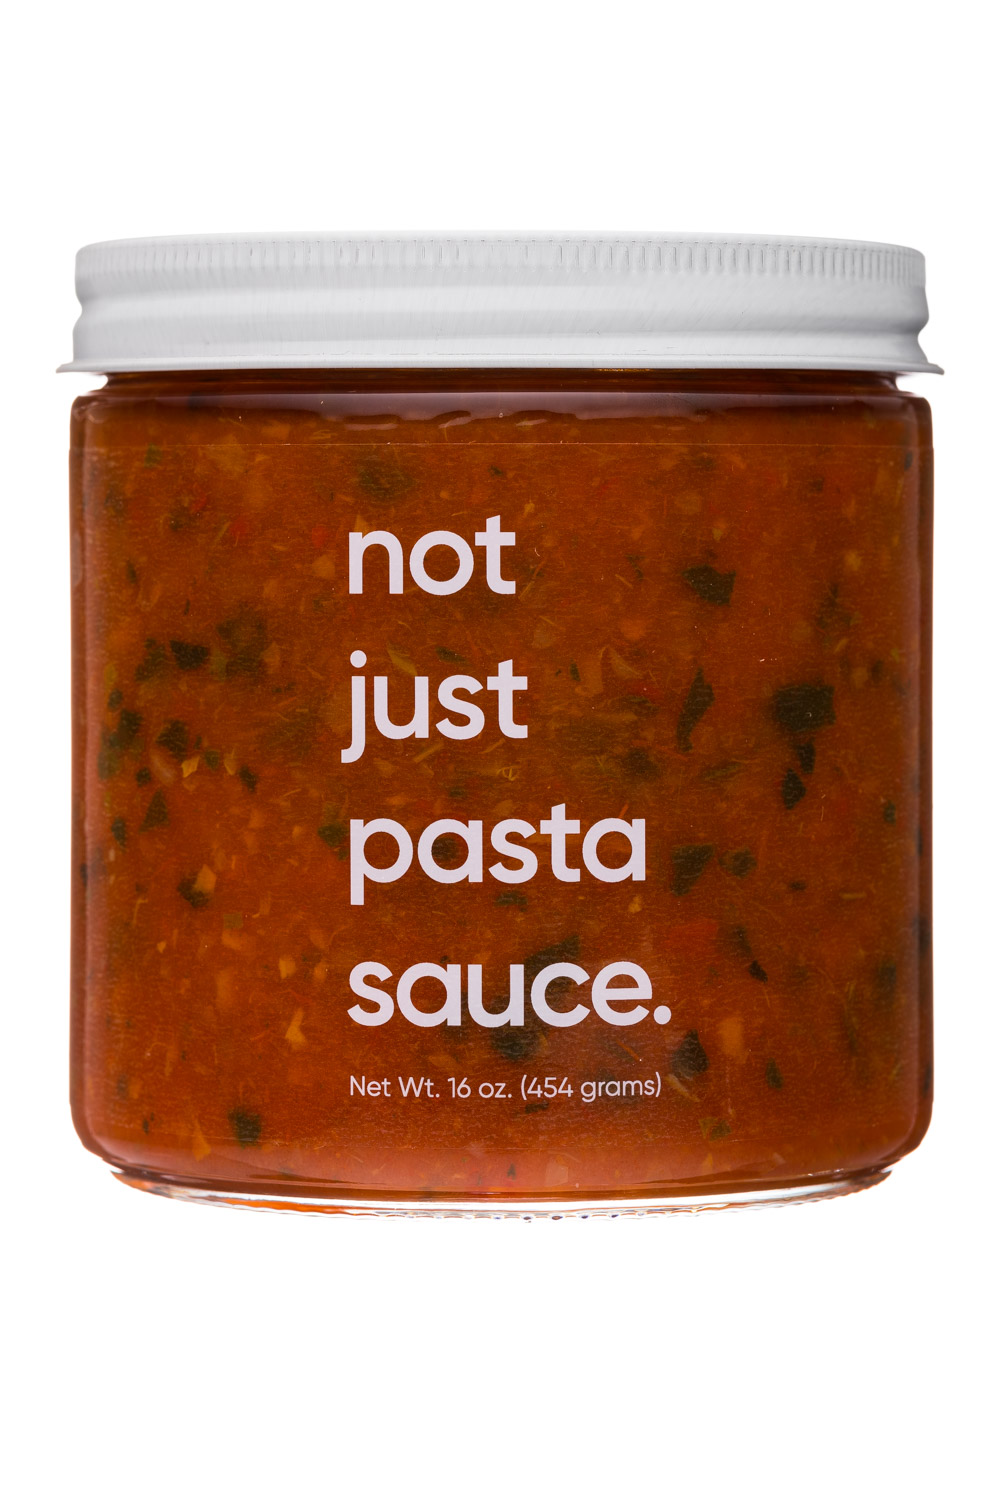 not just pasta sauce